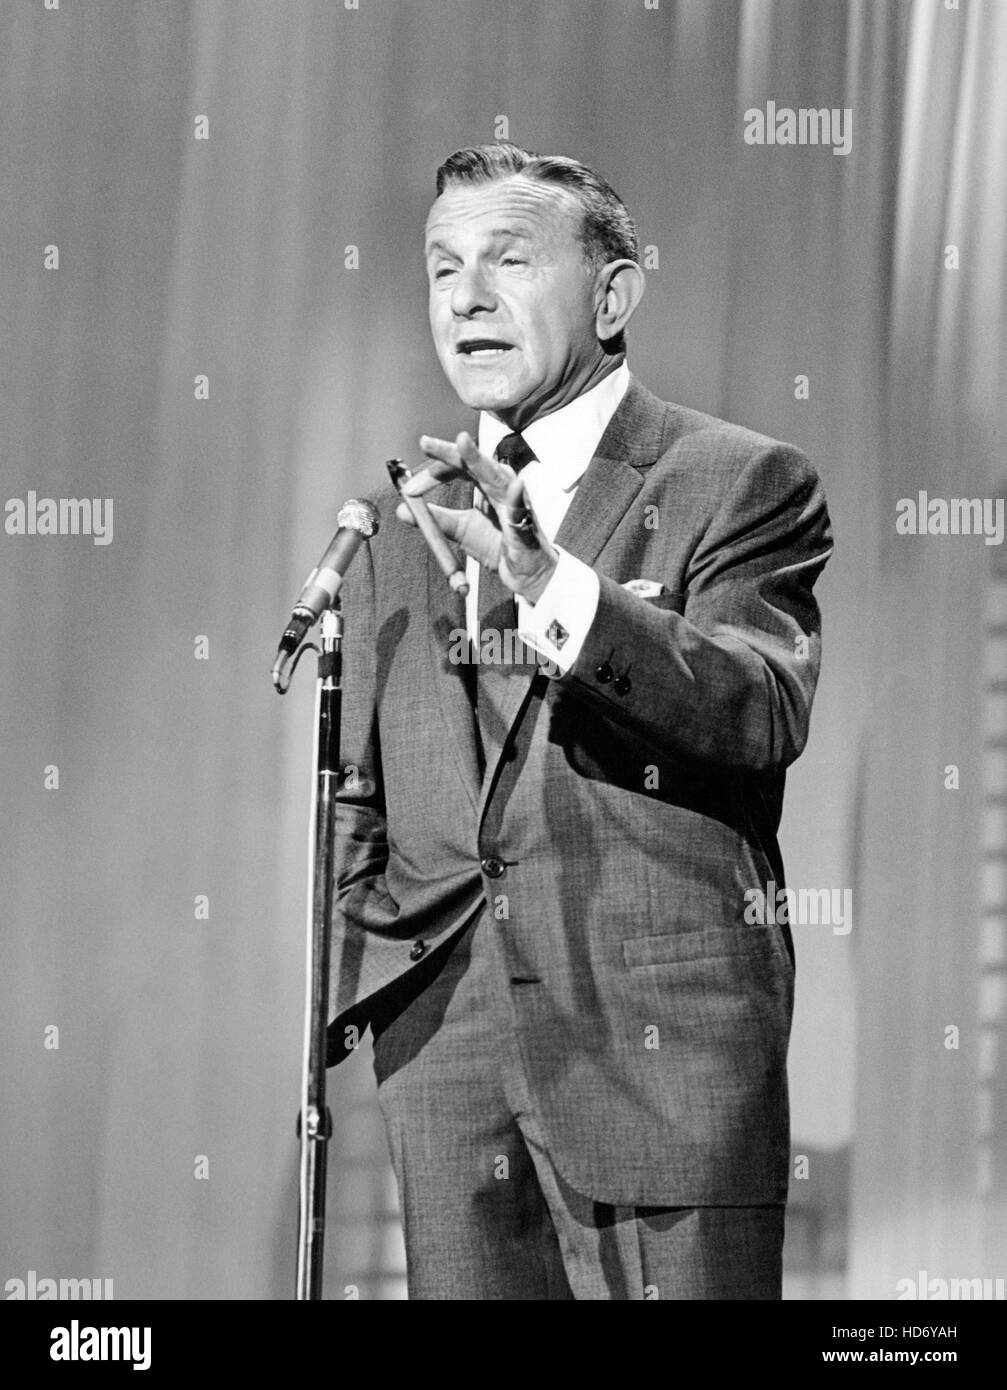 WENDY AND ME, George Burns, 1964-65 Stock Photo - Alamy